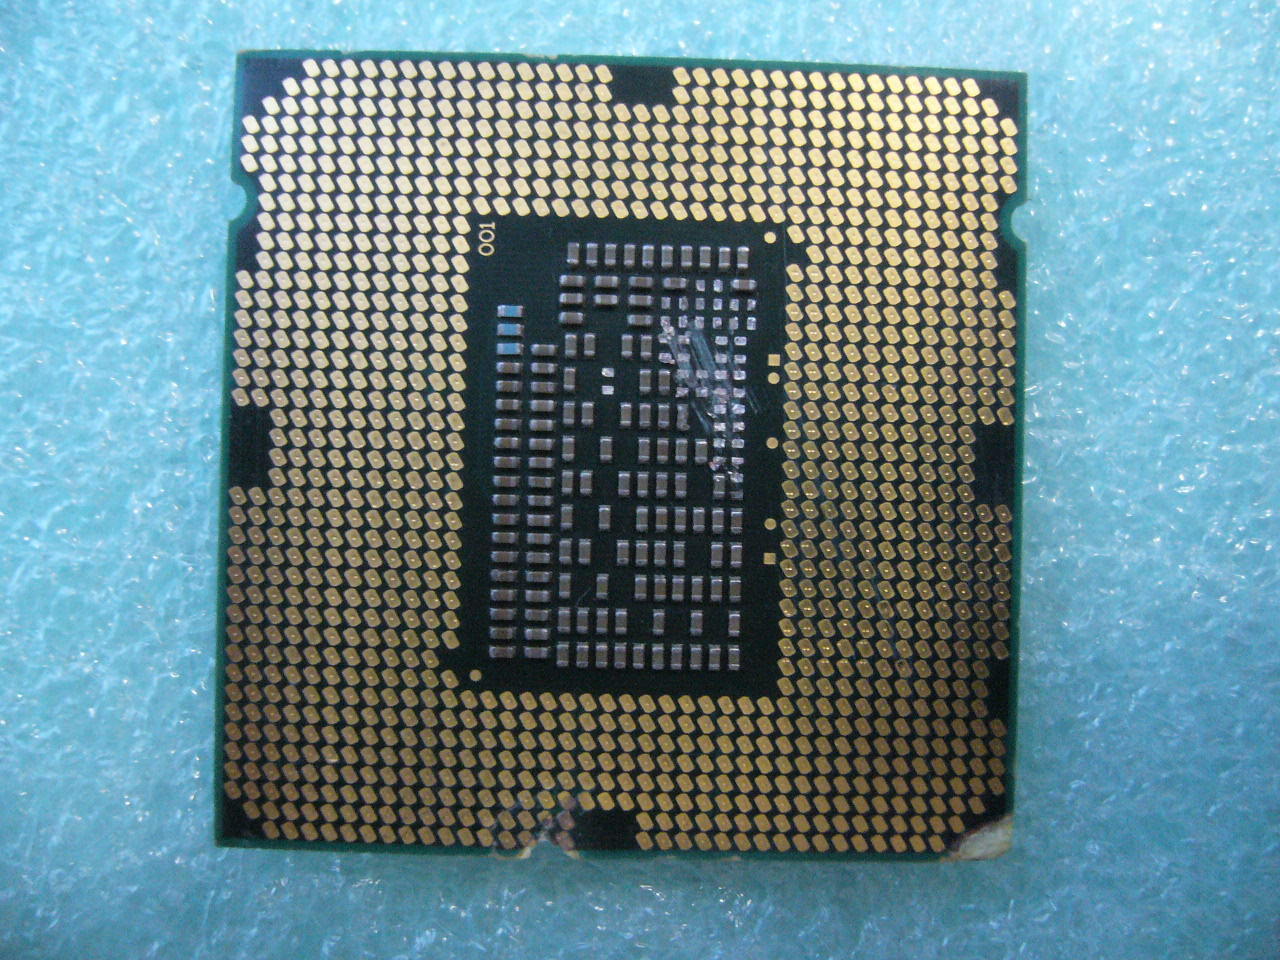 QTY 1x Intel CPU i5-2500S Quad-Cores 2.70Ghz LGA1155 SR009 damaged NOT WORKING - Click Image to Close